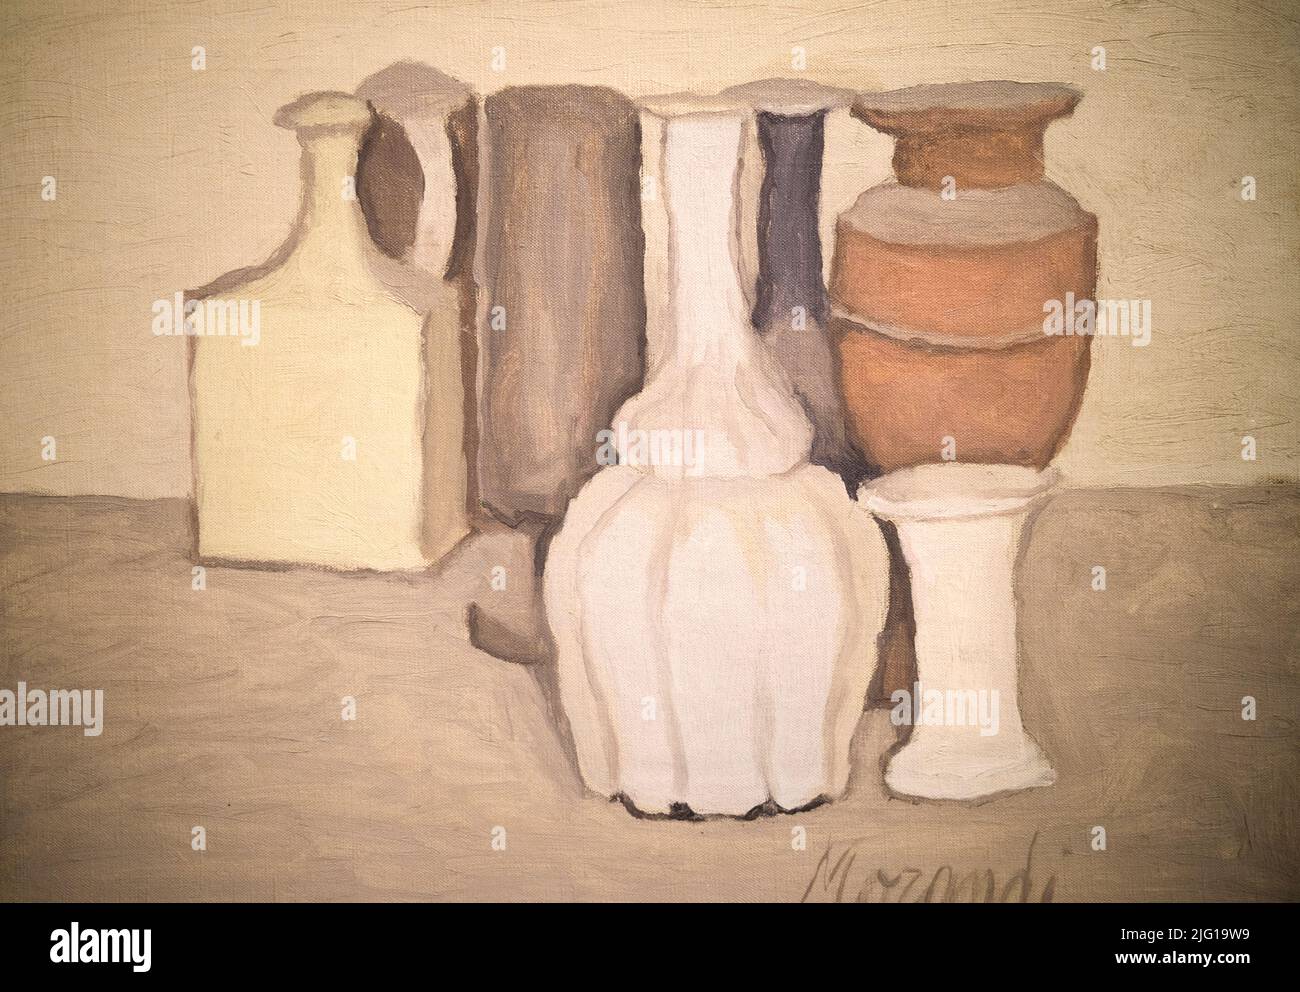 Giorgi Morandi Still Life Painting Bottles in Museo Marandi inBologna Italy Stock Photo